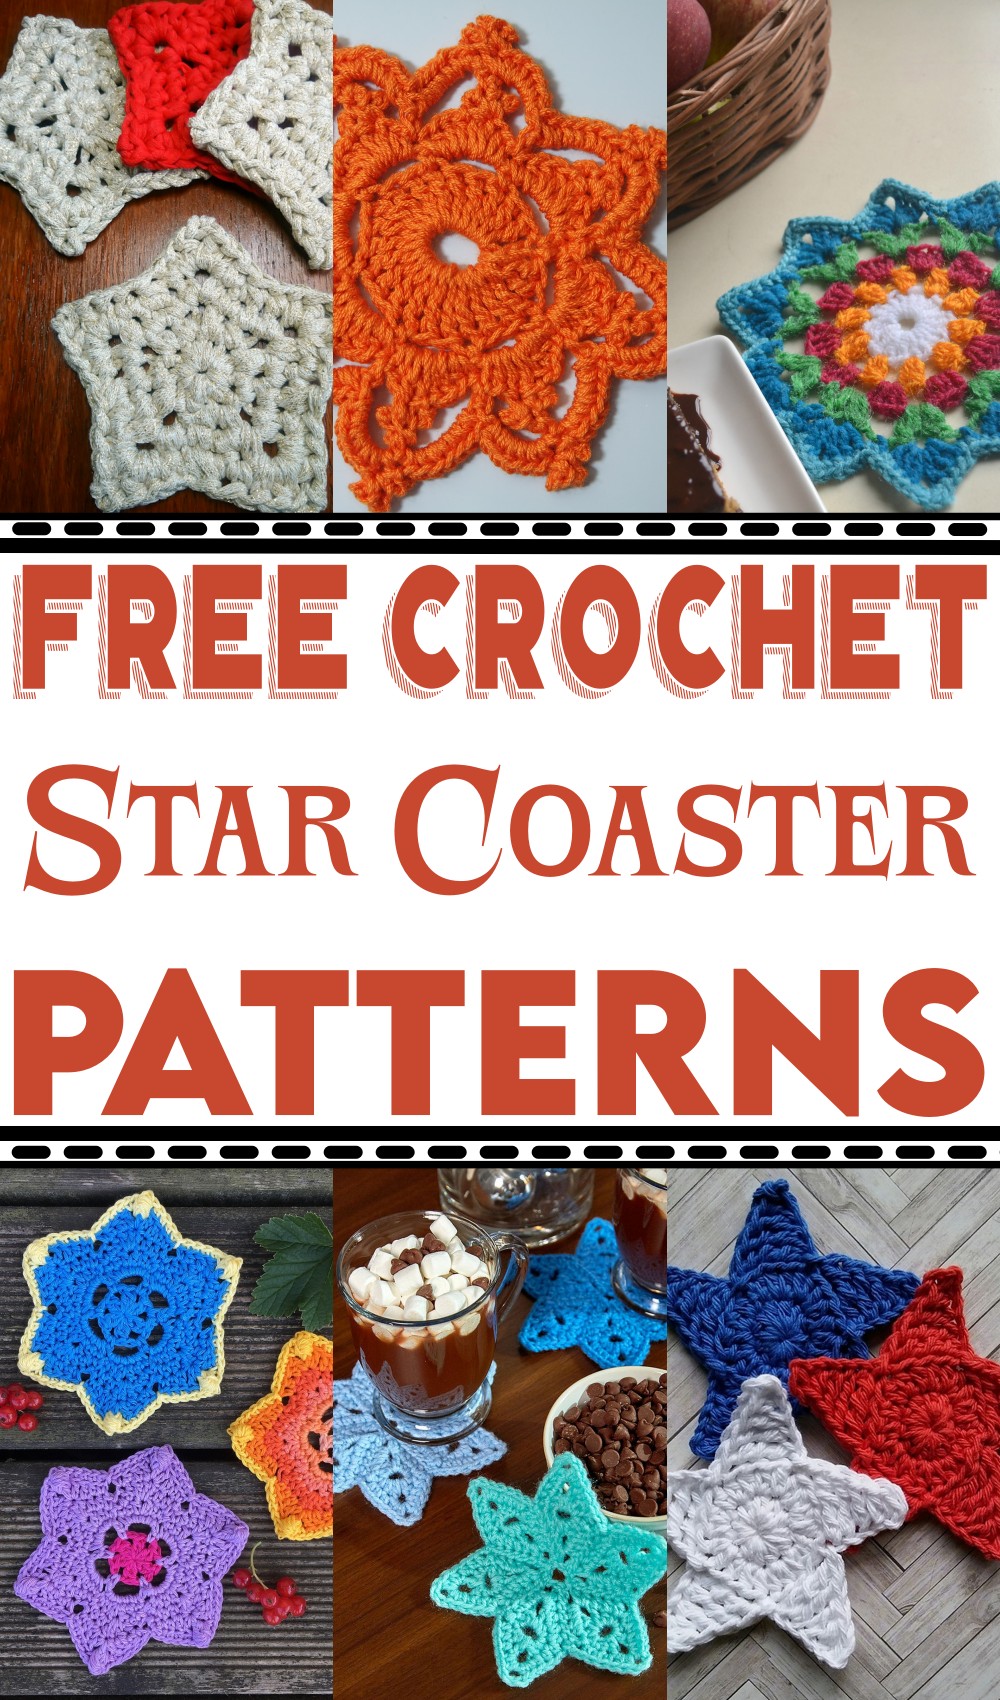 Free Crochet Star Coaster Patterns